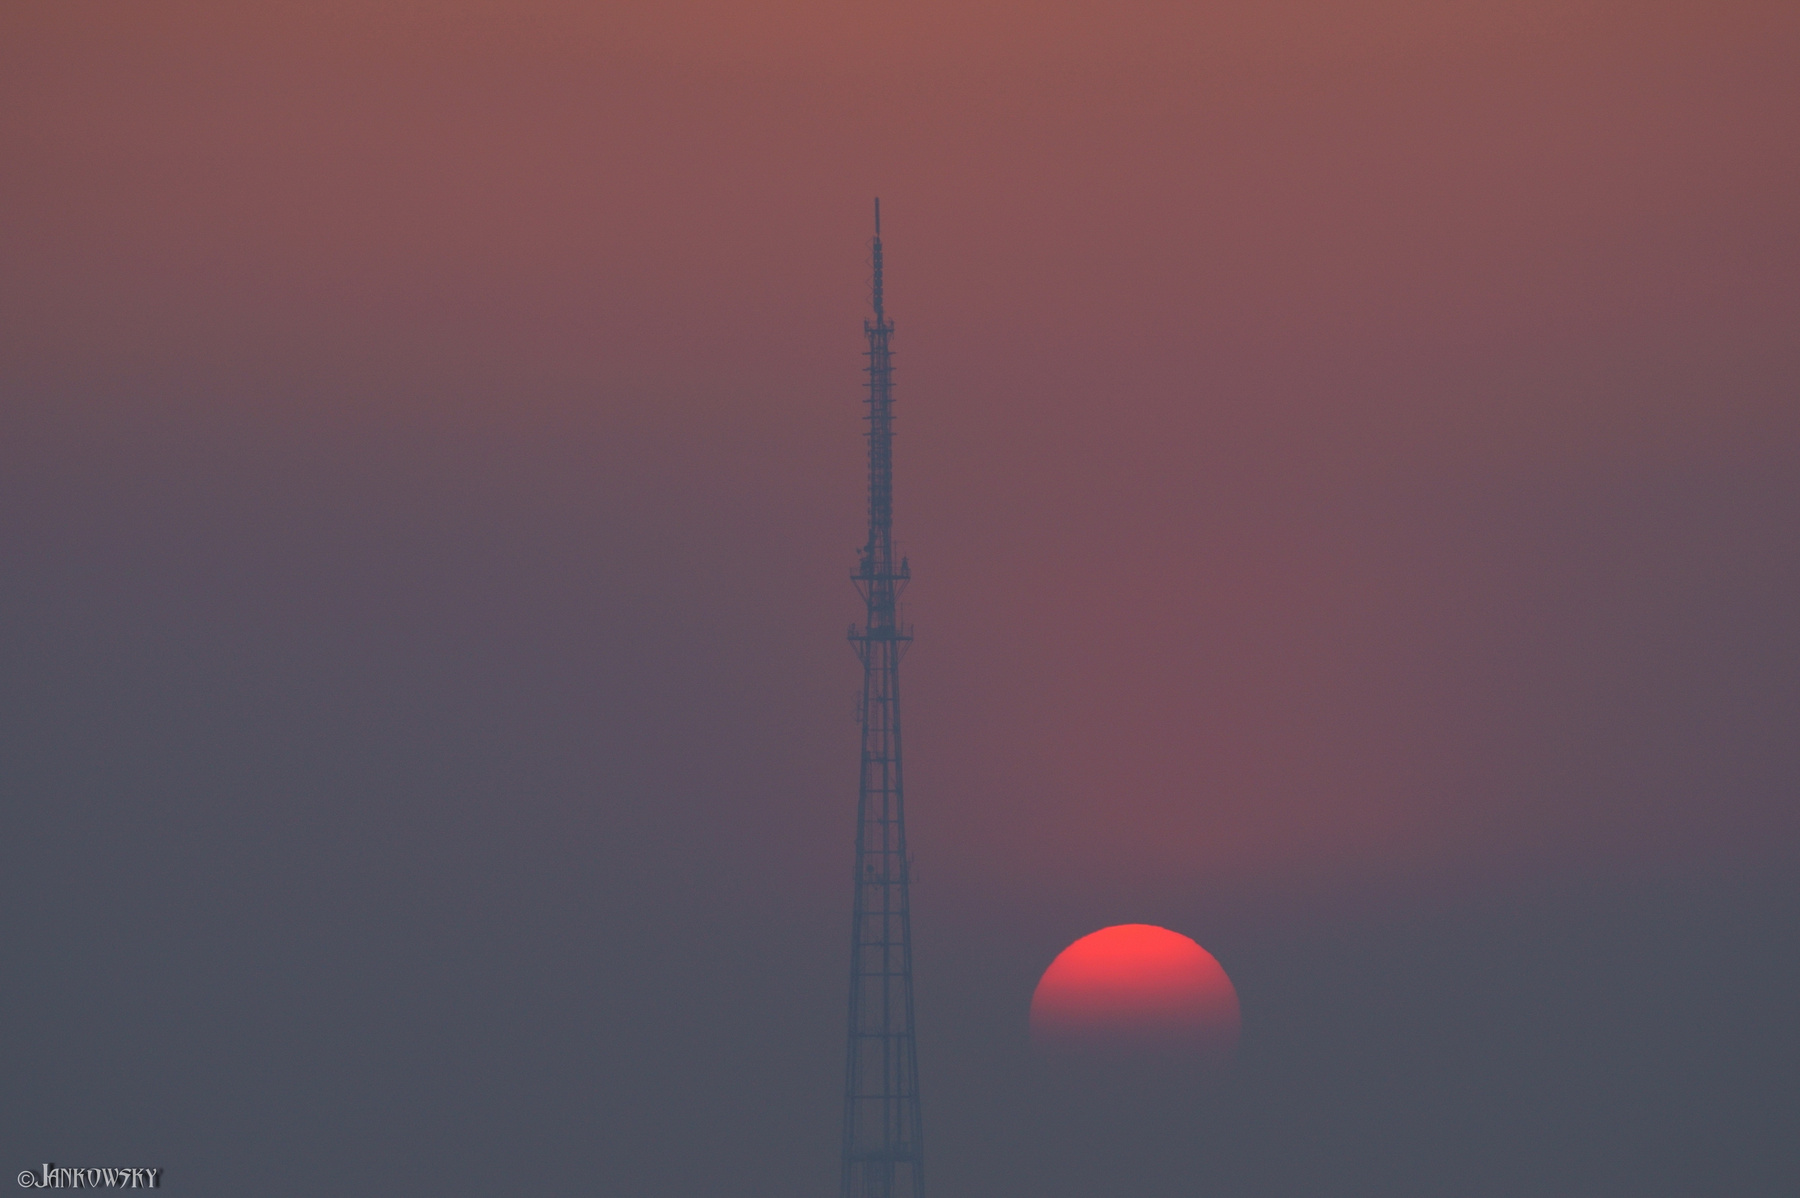 Пекло 6.05.21 -  Транзит  по телебашне омск смог солнце транзит телебашня диск солнца красное туман canon FD 300mm f2.8